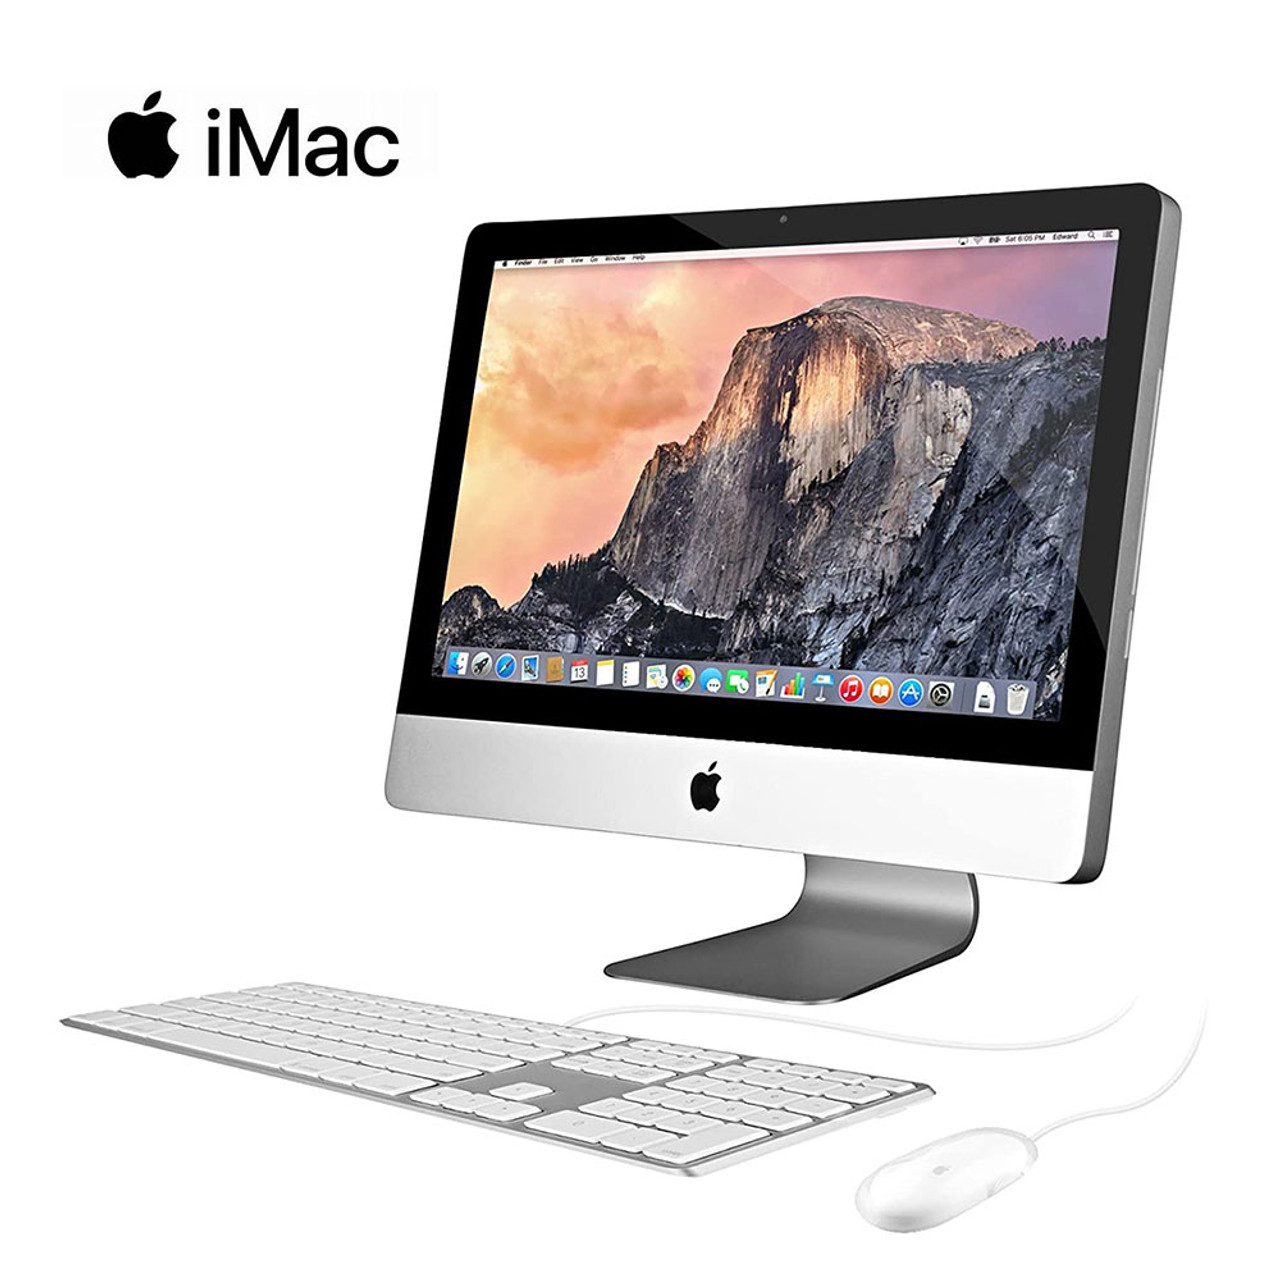 Apple® iMac with Intel Core i3 3.1GHz, 4GB RAM, 250GB HDD